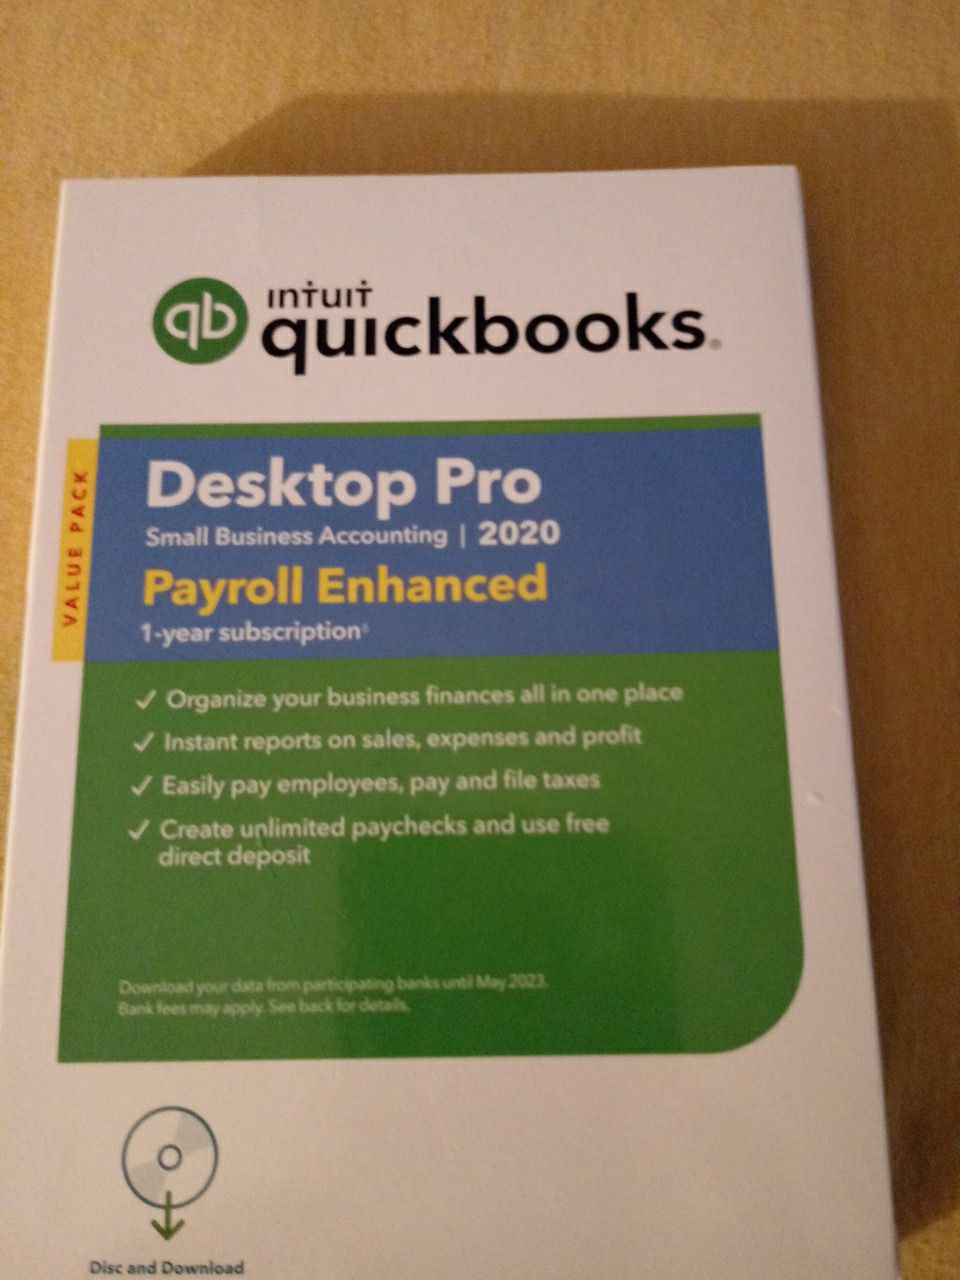 Intuit QuickBooks Desktop Pro 2020 payroll enhanced